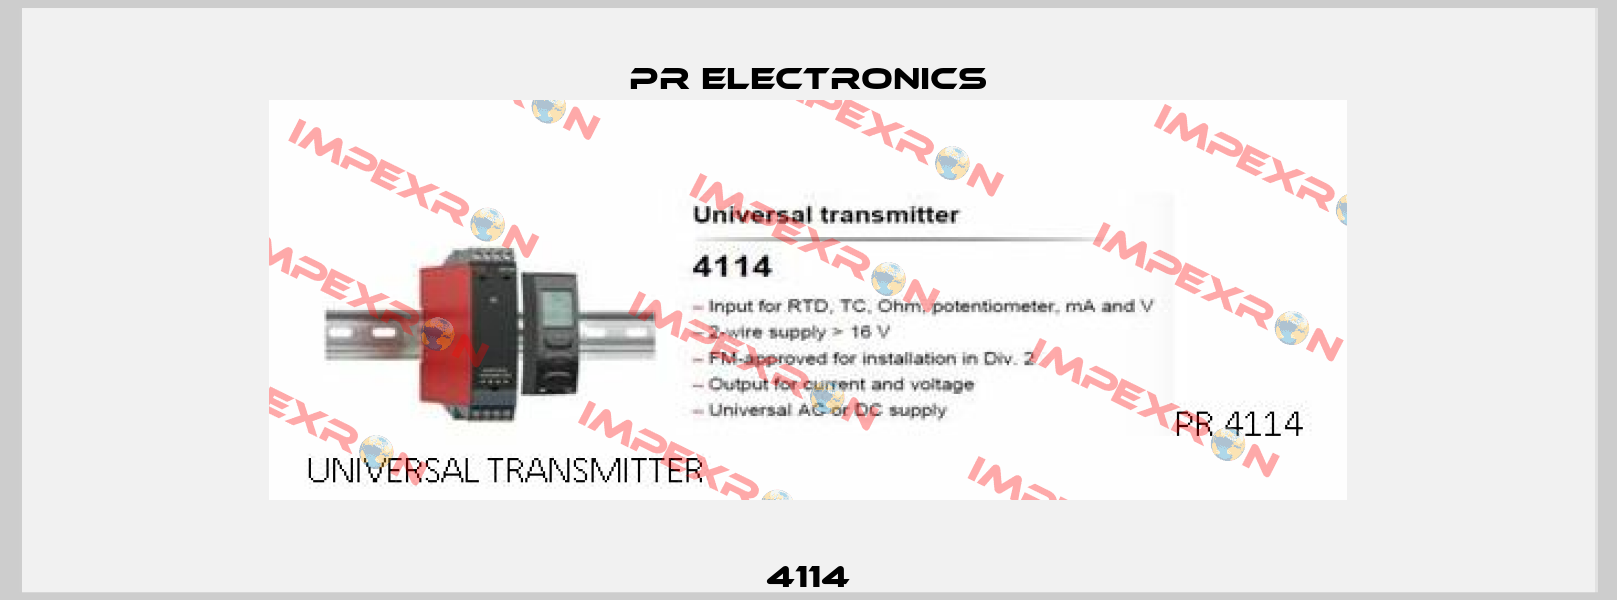 4114 Pr Electronics